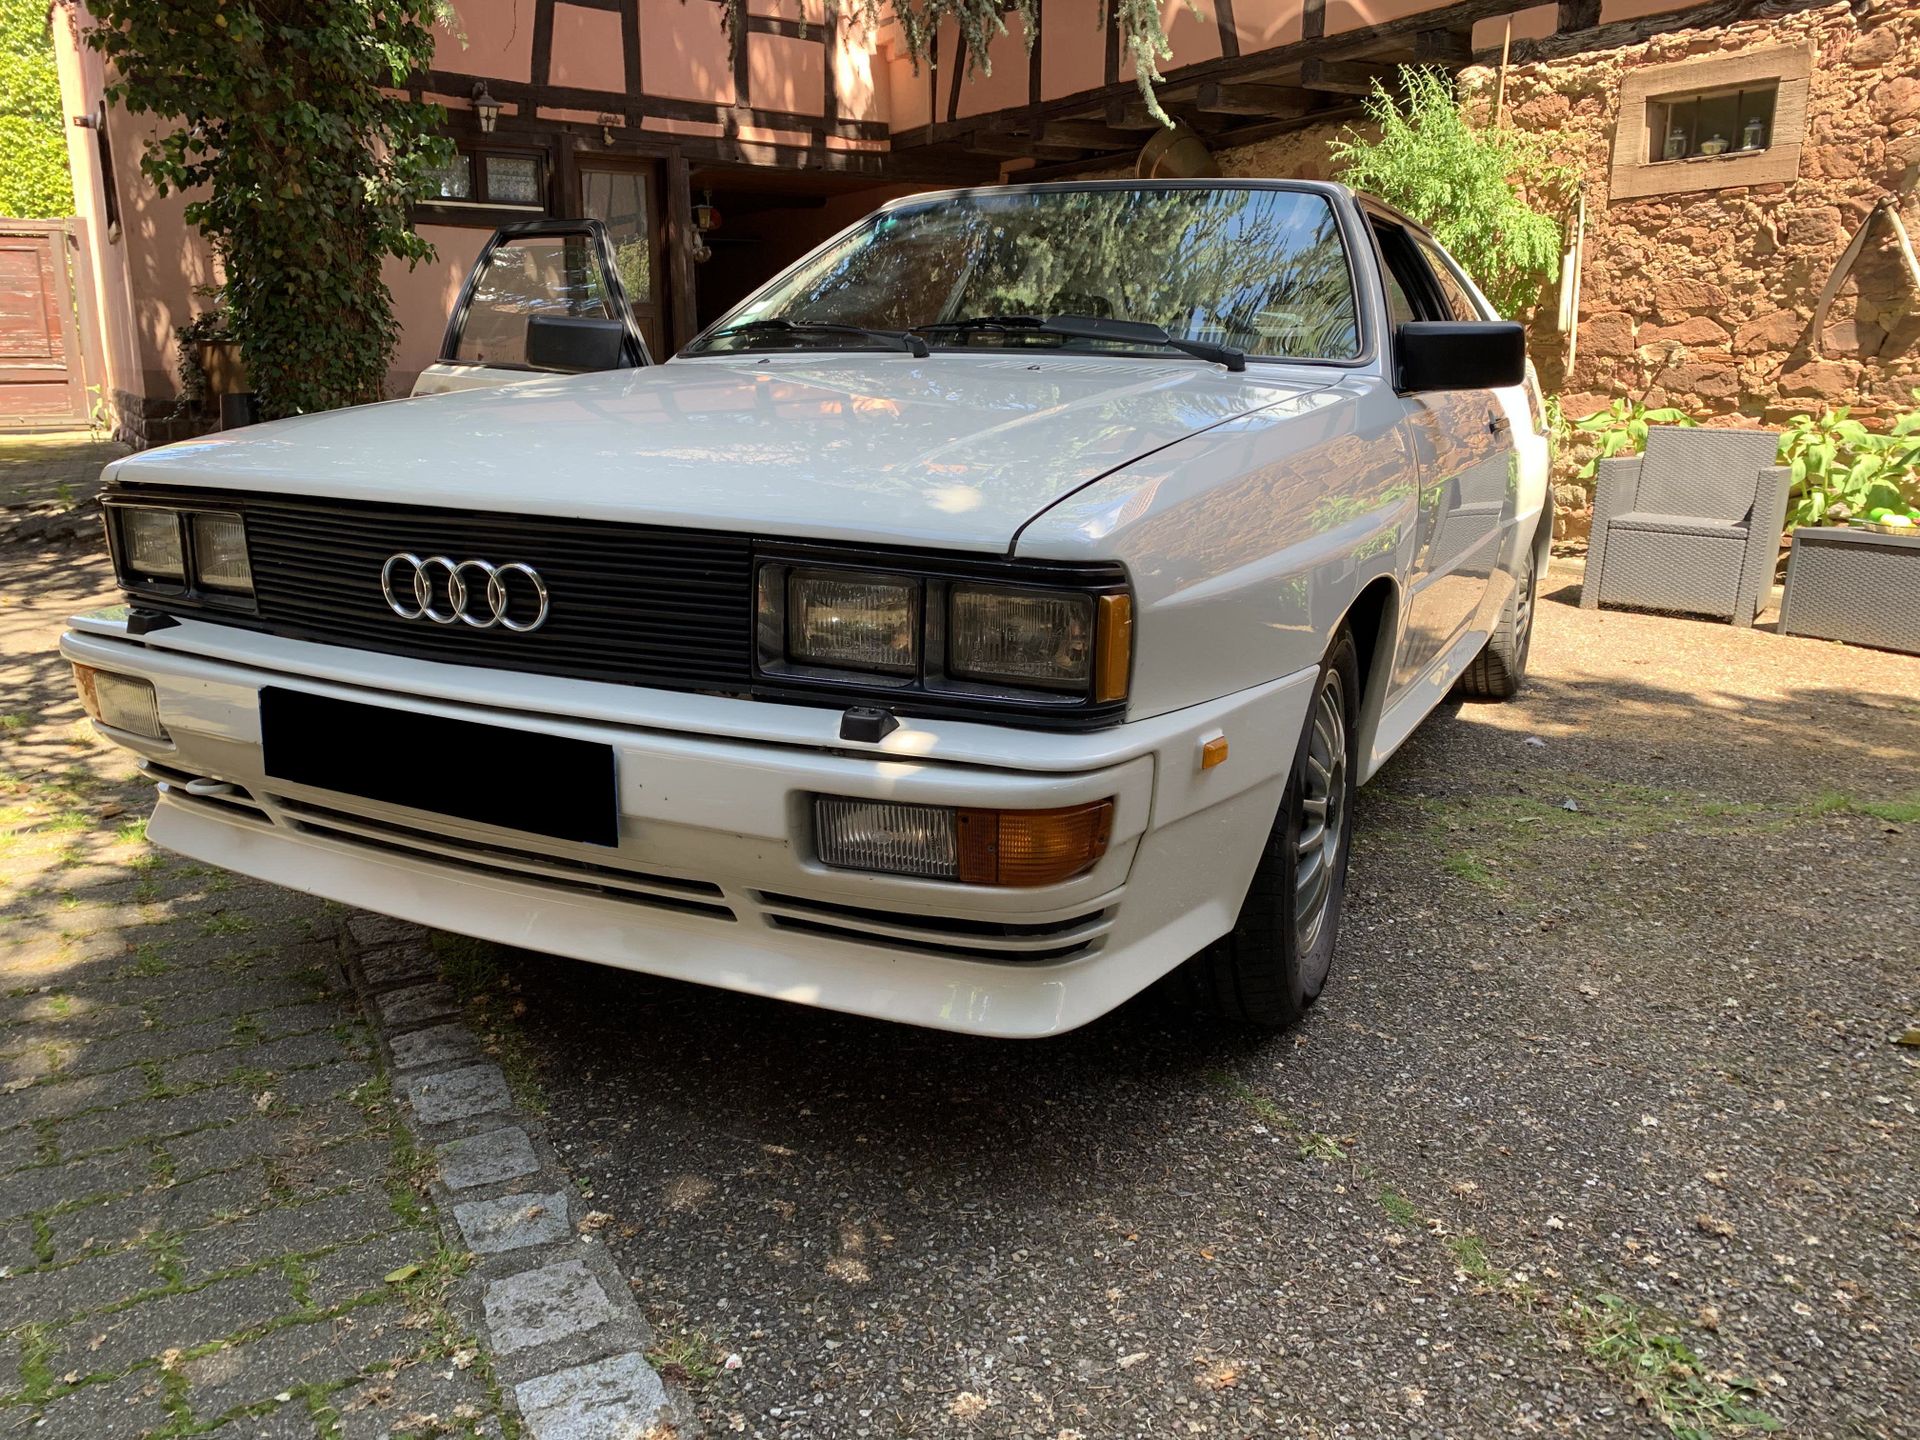 1982 Audi Quattro Número de serie: WAUZZZ85ZCA901202

Un mito del automóvil

Reg&hellip;